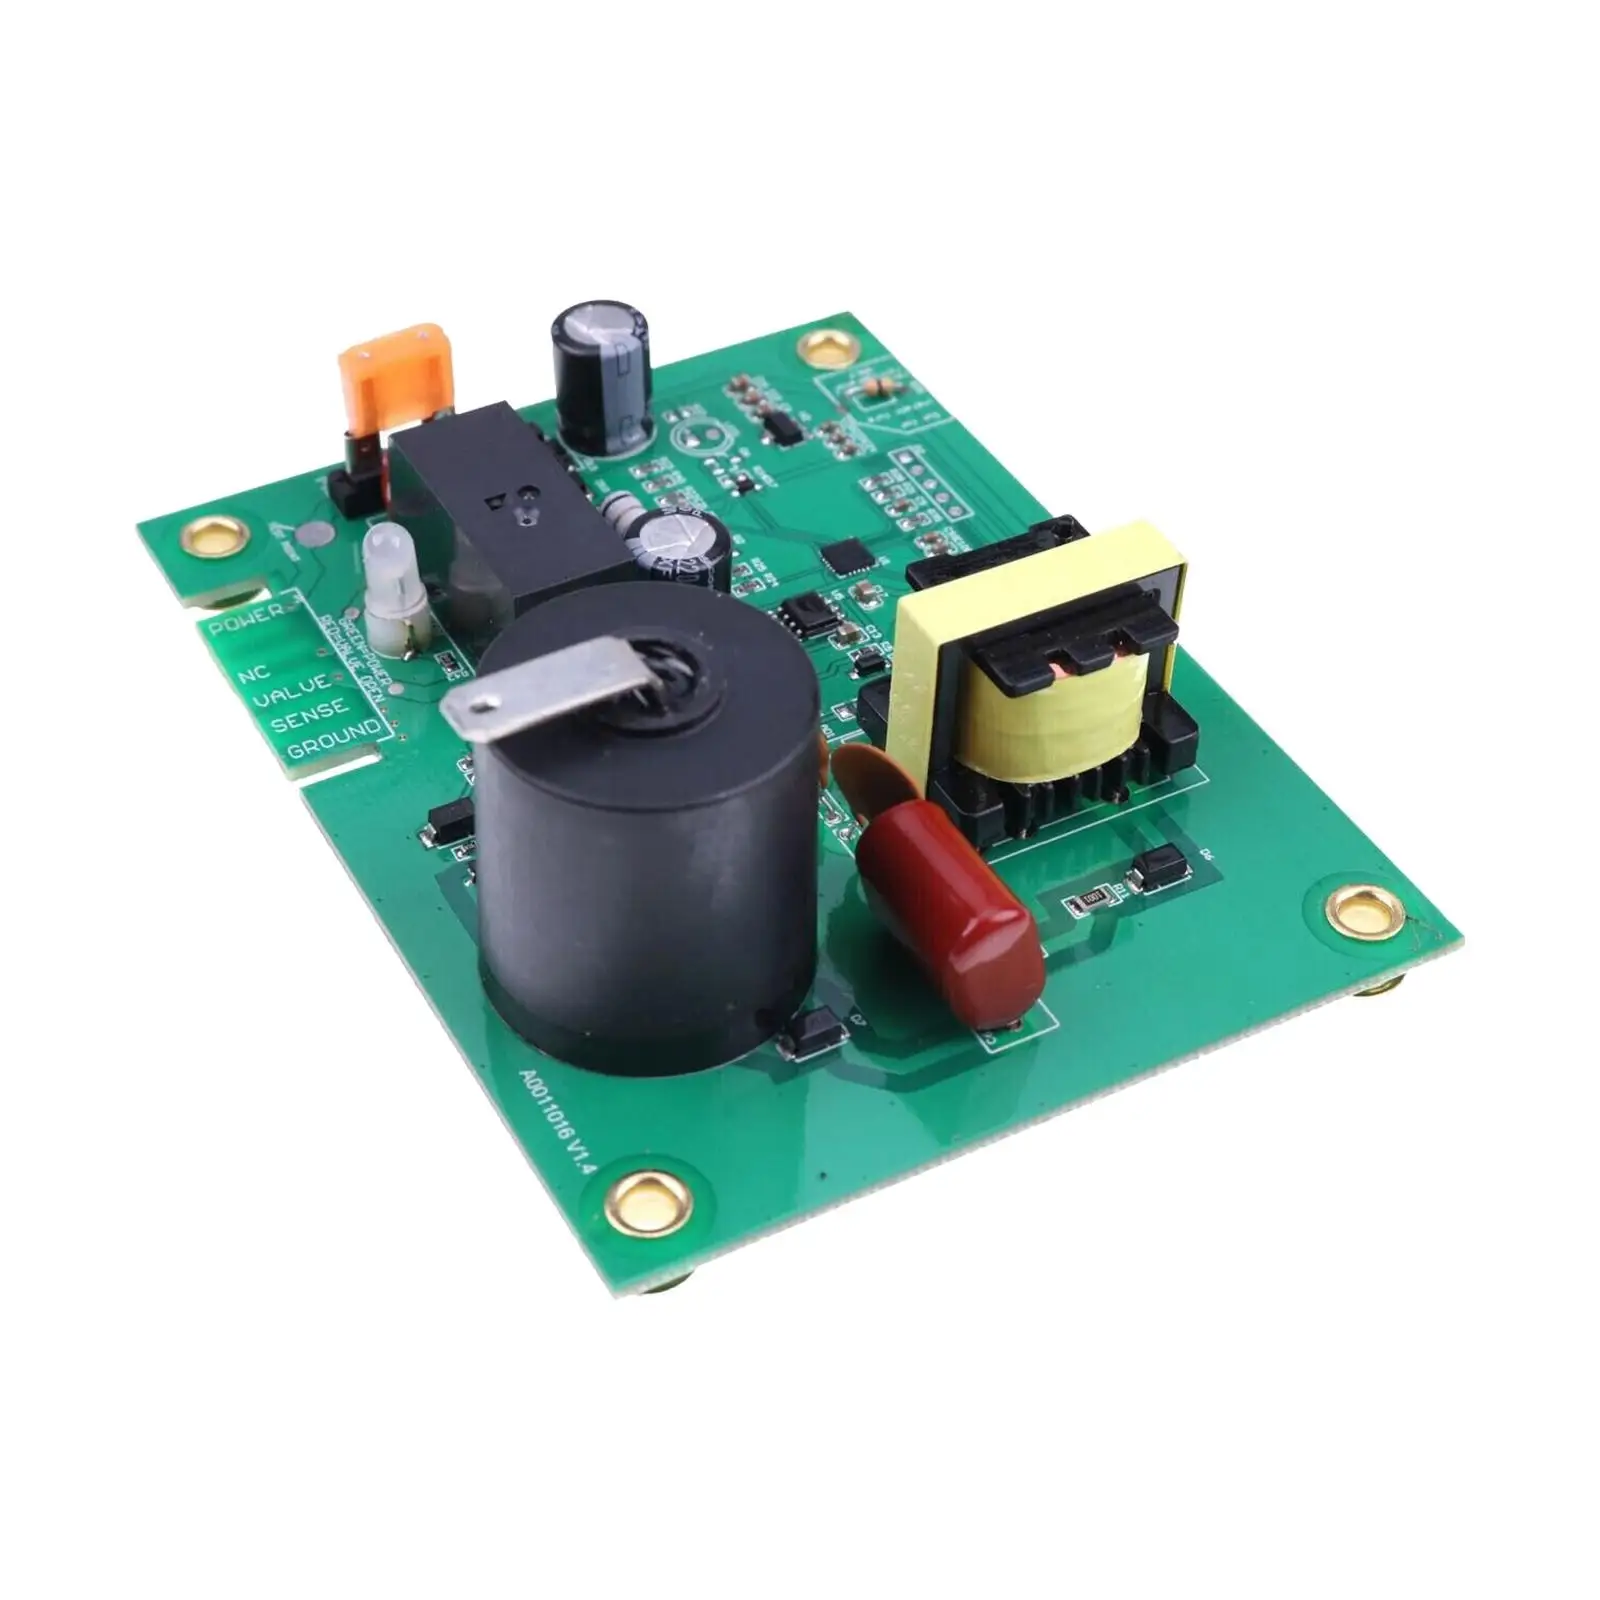 Ignition Control Circuit Board Uib S Board DC 12V Replacement Water Heater Control Circuit Board Sturdy Electronics Accessories